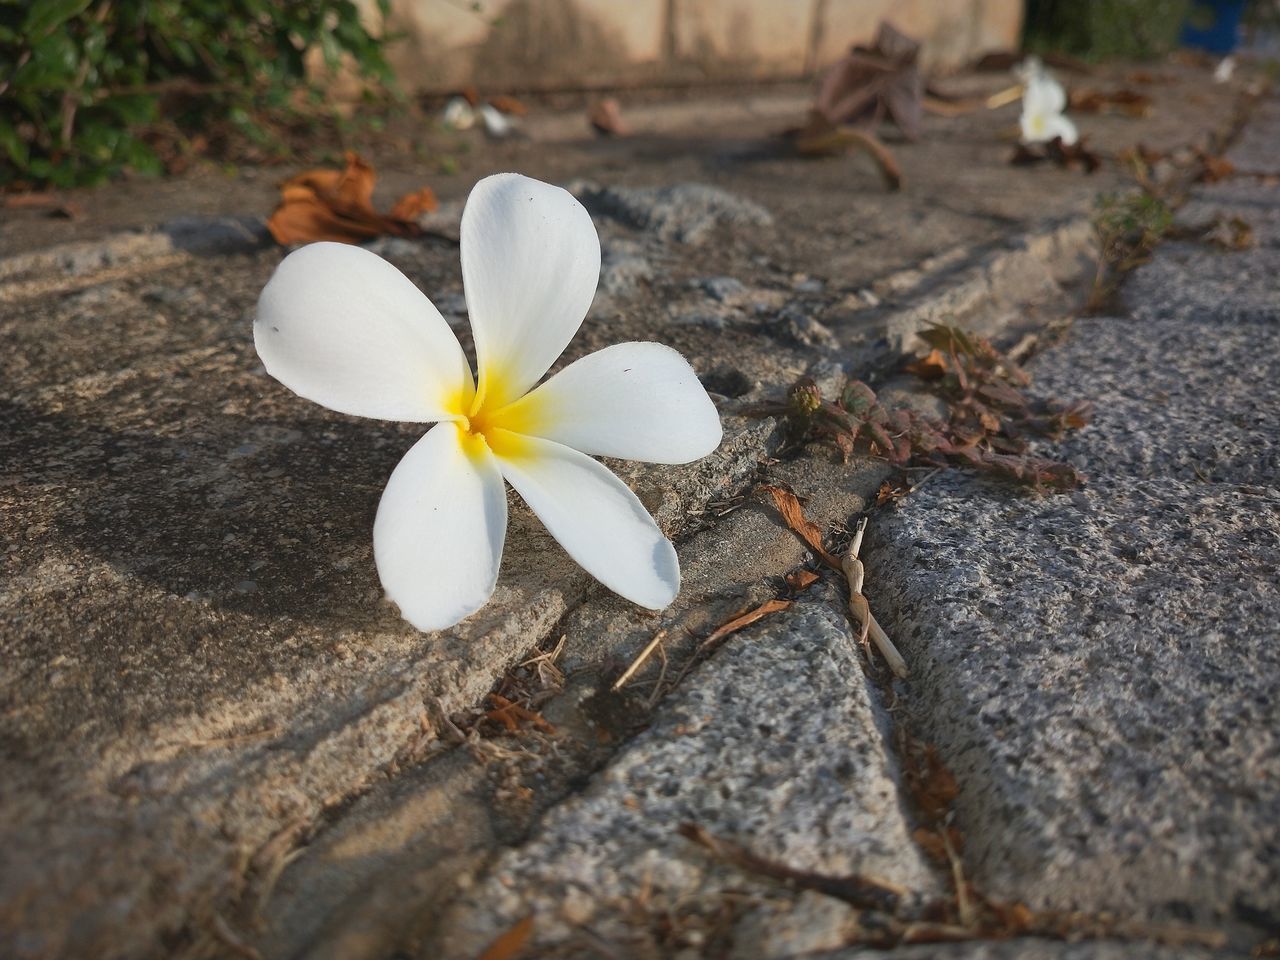 CLOSE-UP OF WHITE FRANGIPANI FLOWER ON PLANT